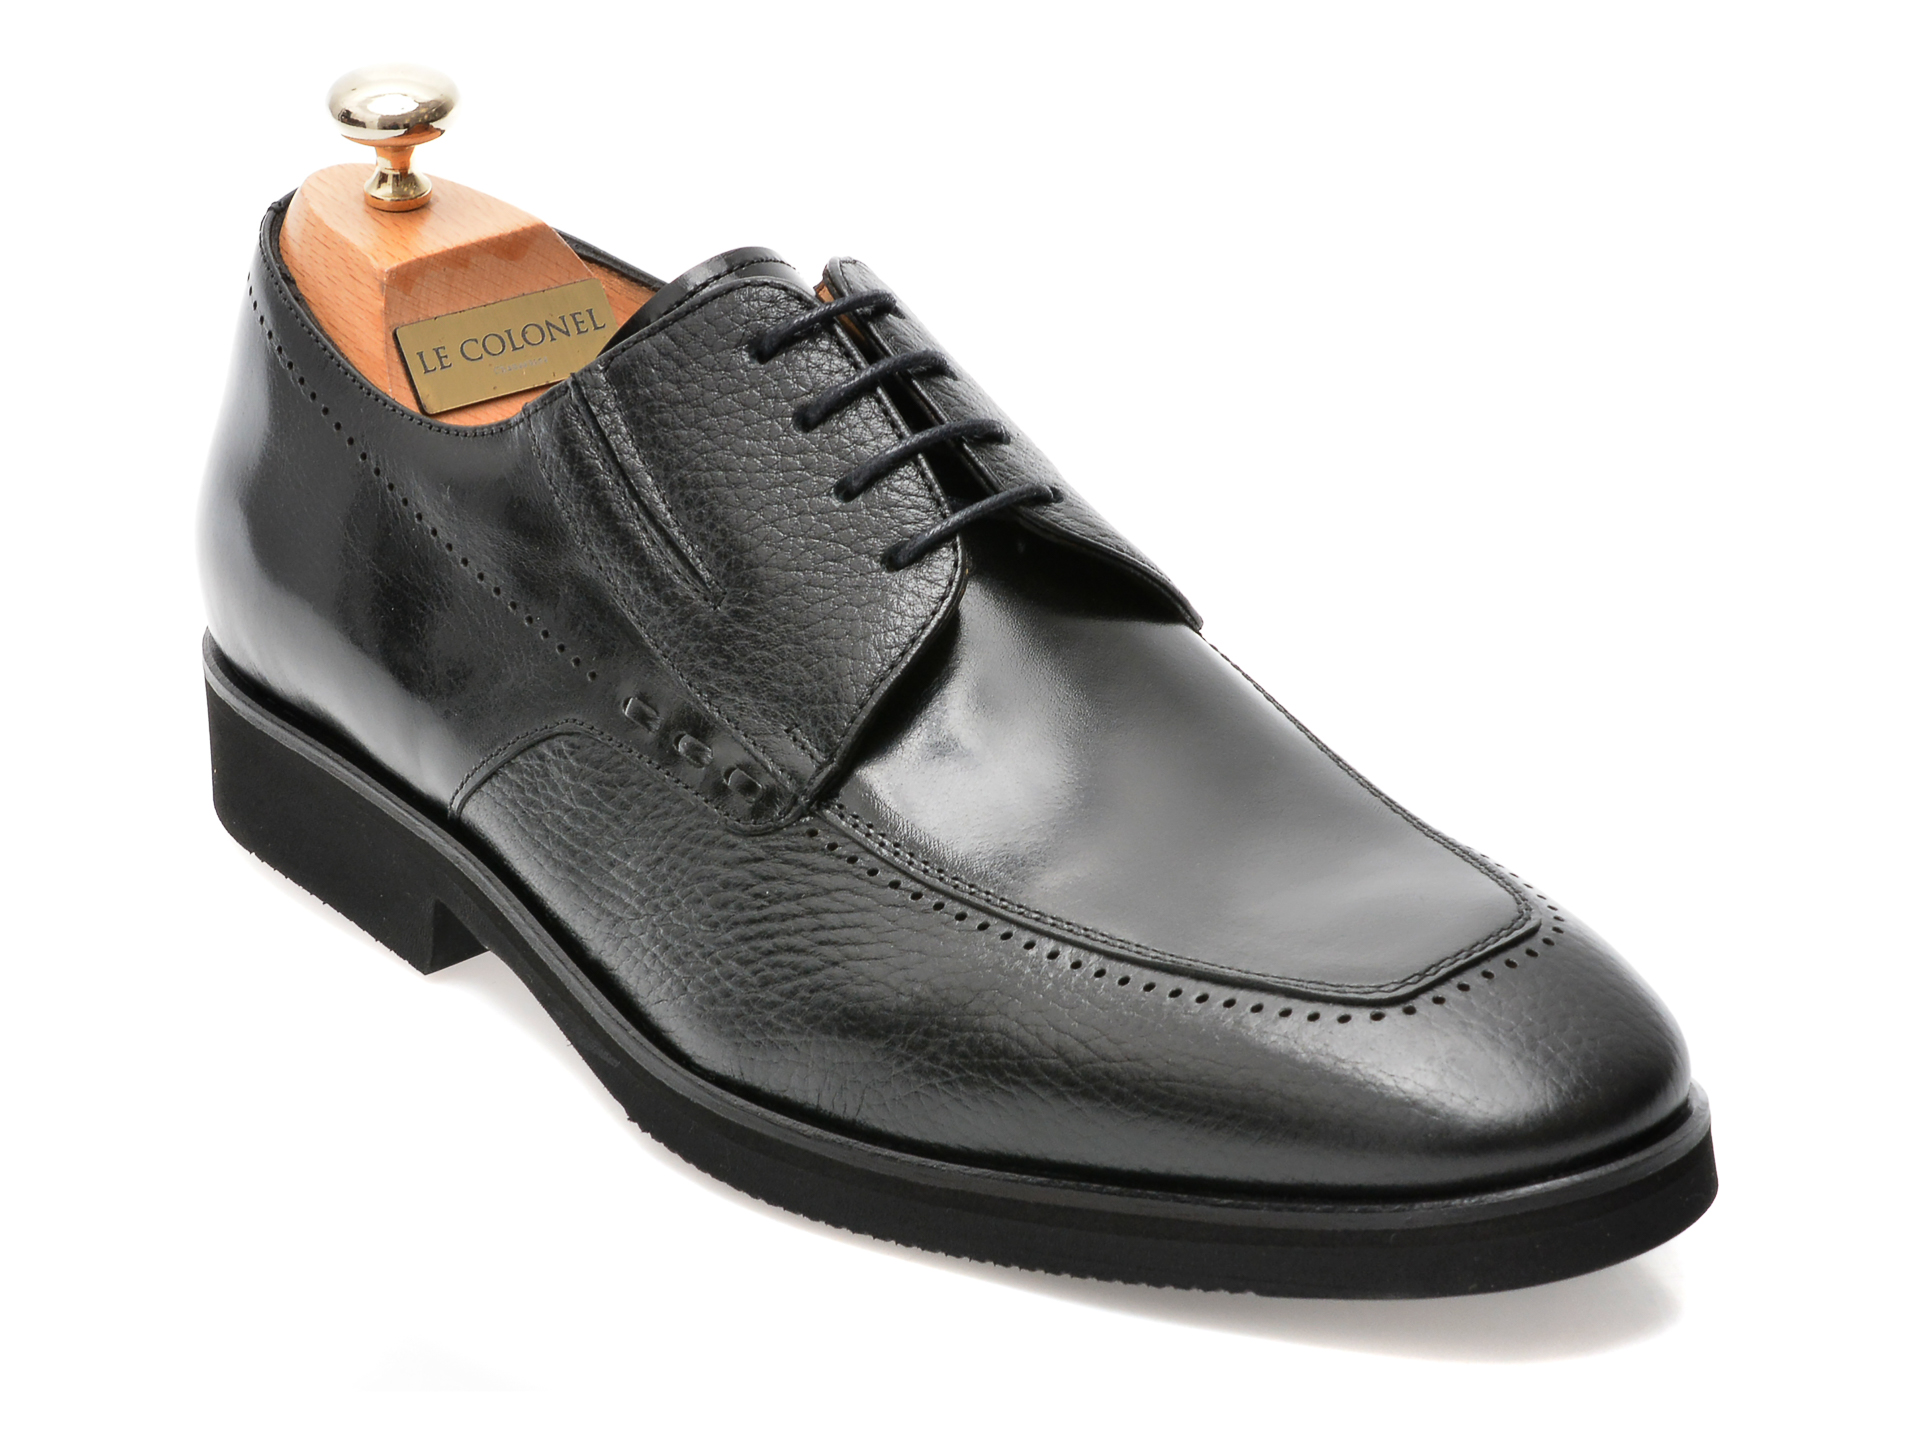 Pantofi LE COLONEL negri, 48701, din piele naturala /barbati/pantofi